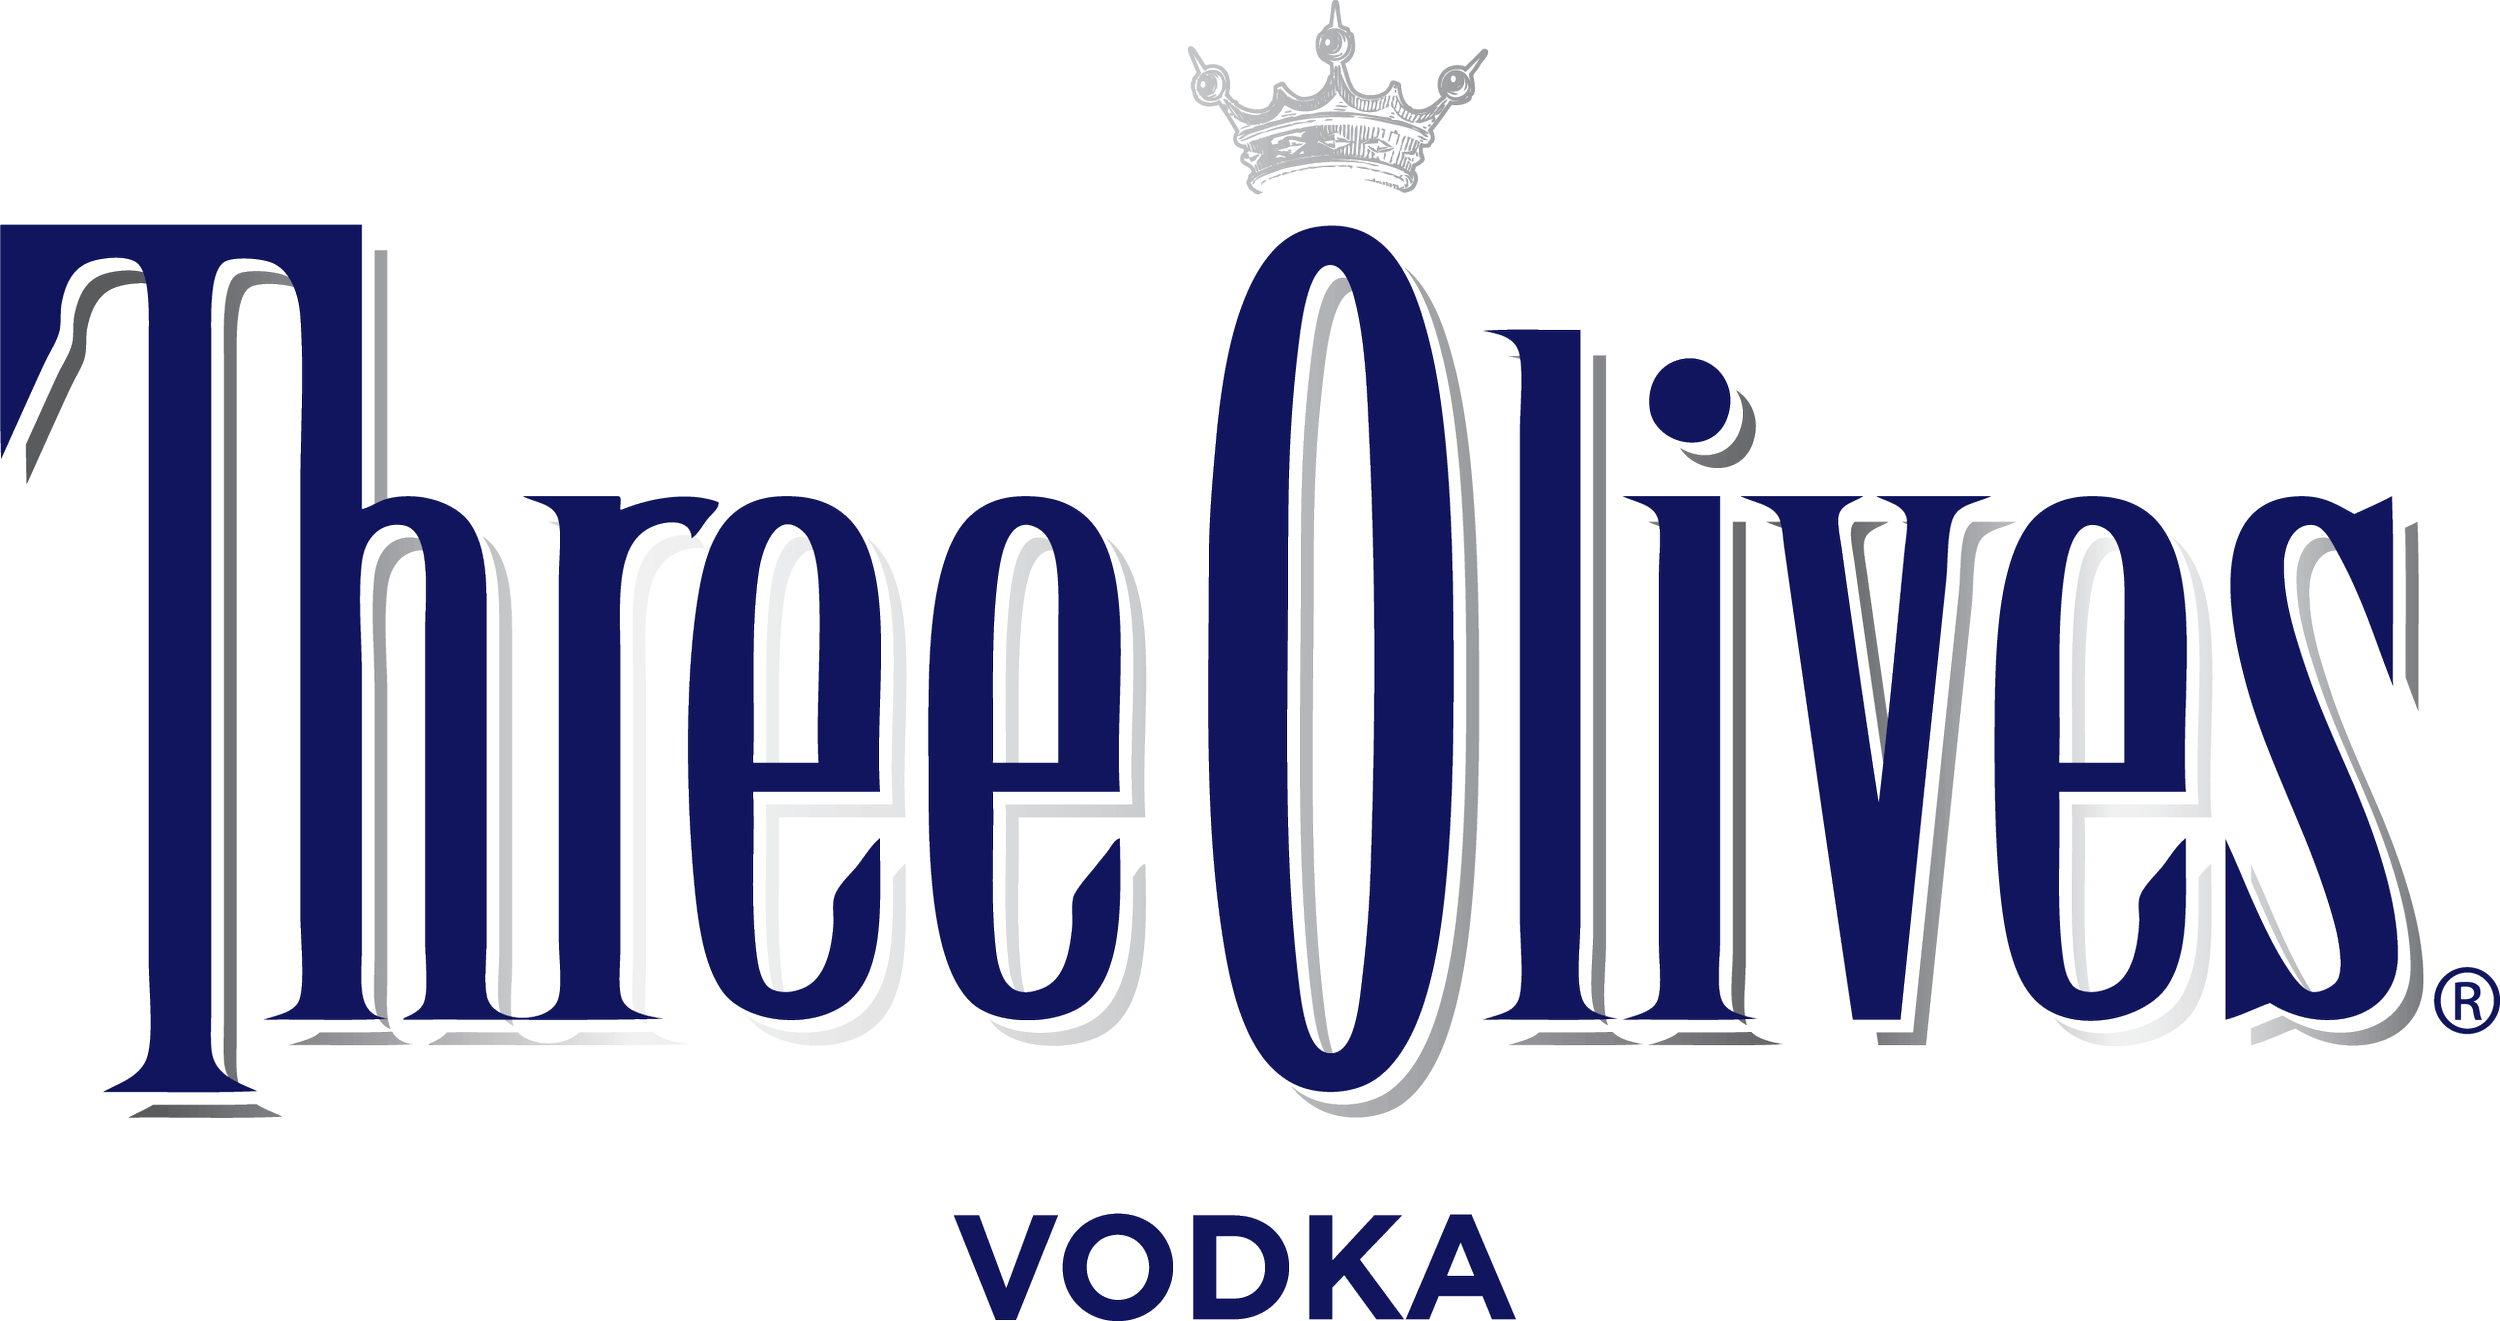 Three-Olives-Vodka-Logo.png